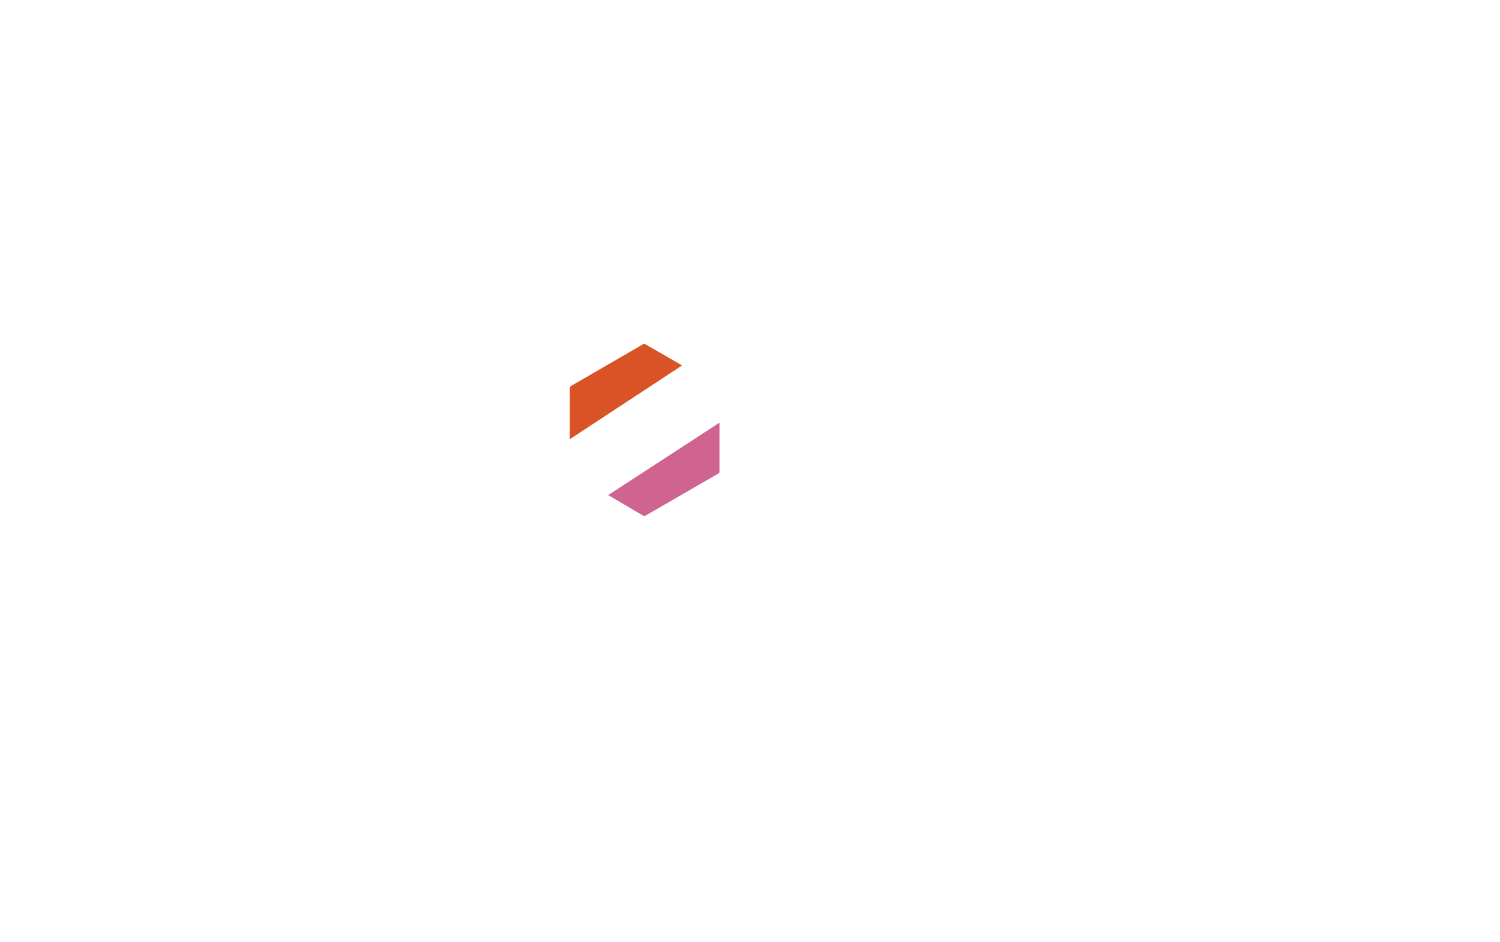 Ram209-Interchange